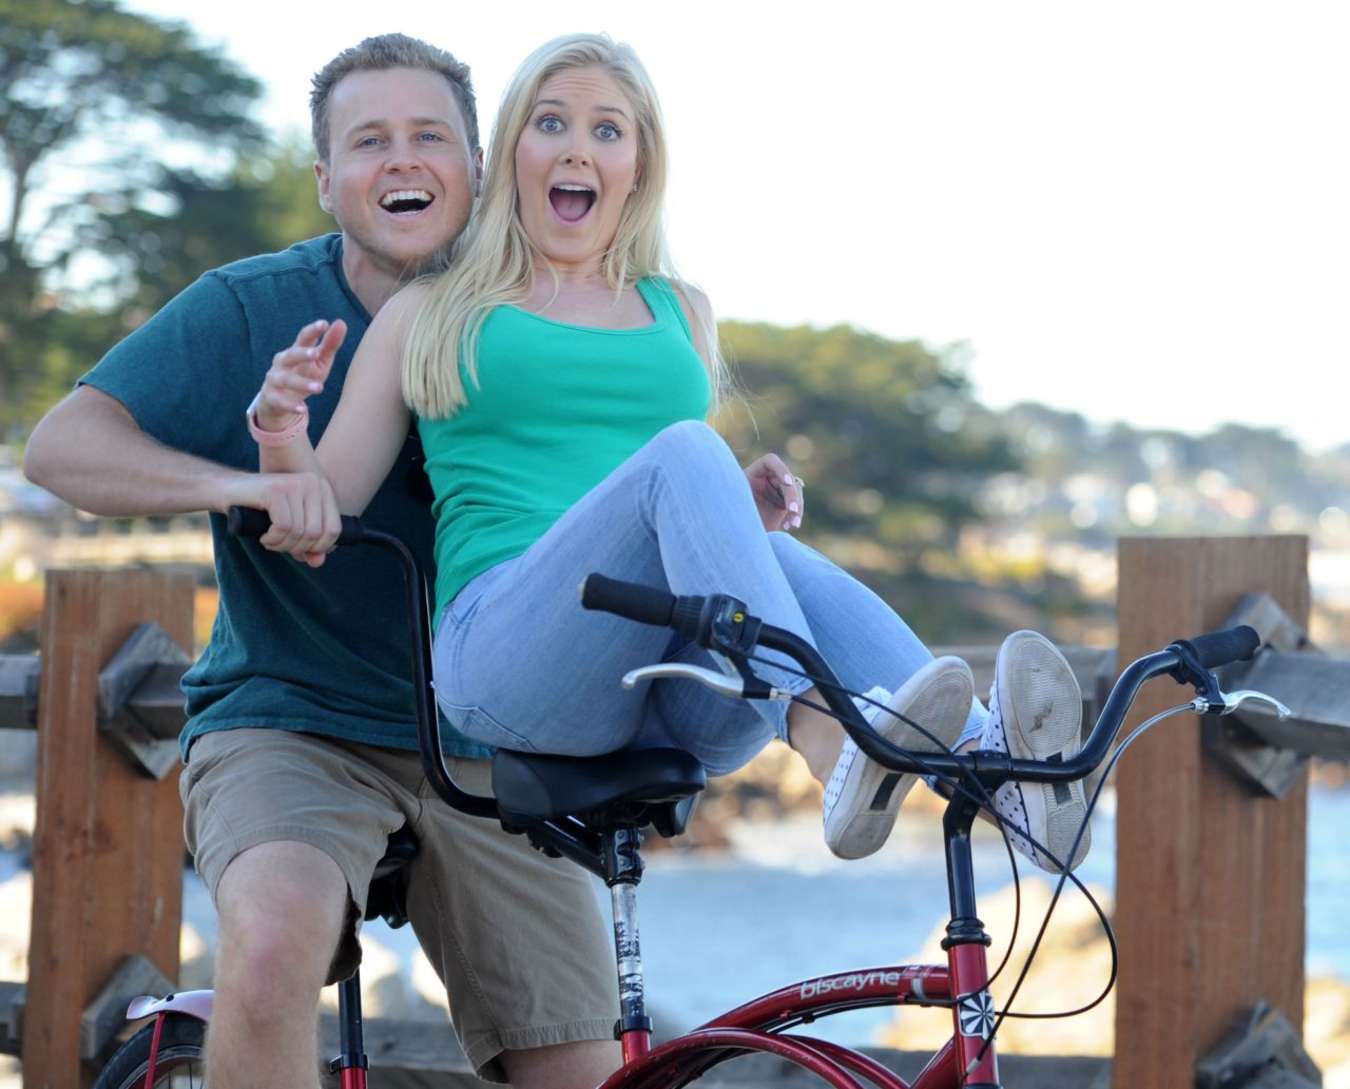 Heidi Montag and Spencer Pratt Celebrate Their 7 Year Anniversary in California